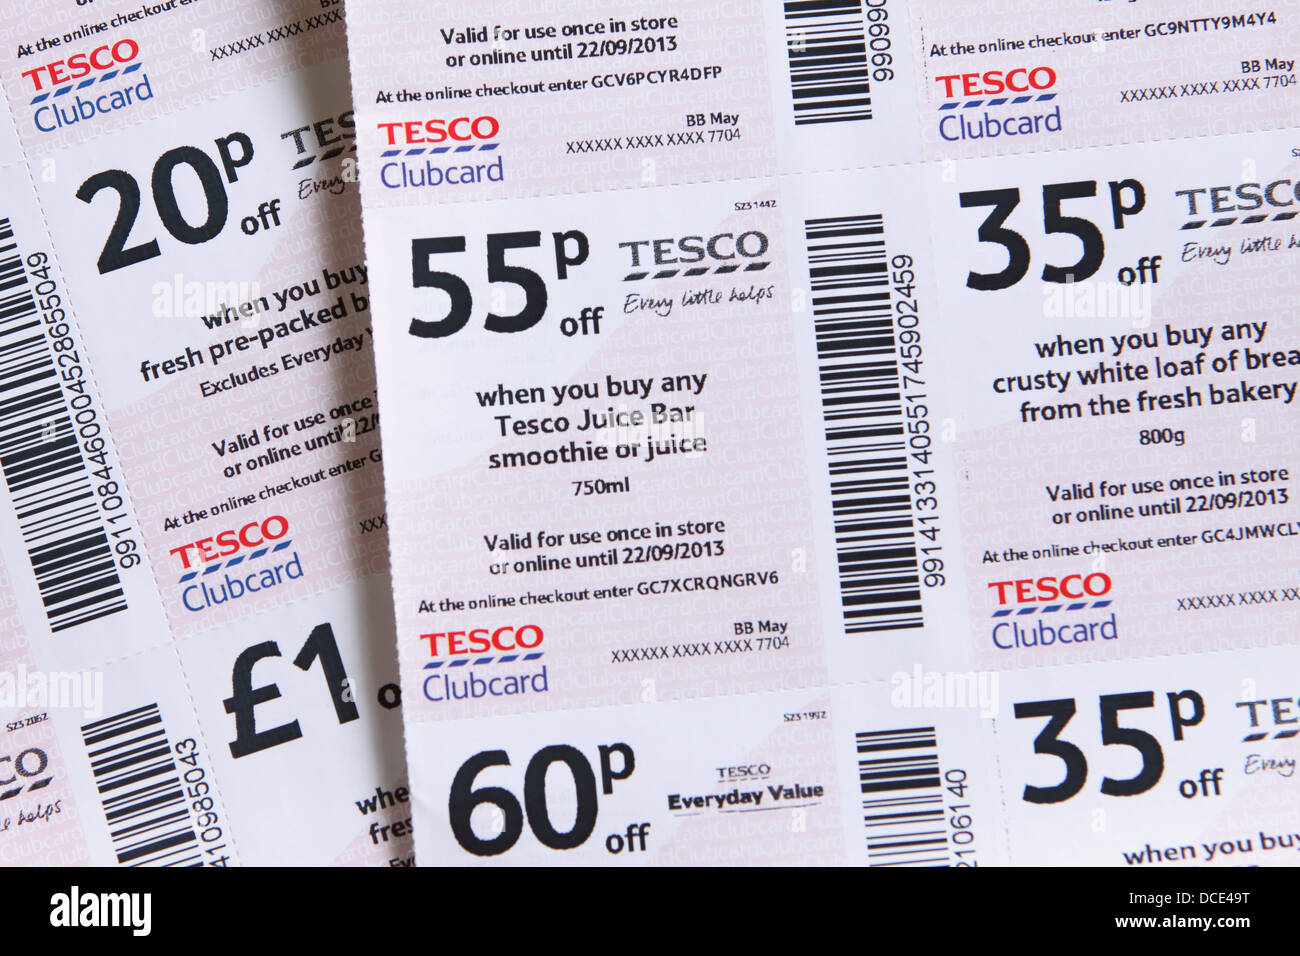 Tesco supermarket Clubcard vouchers offering double points Stock Photo